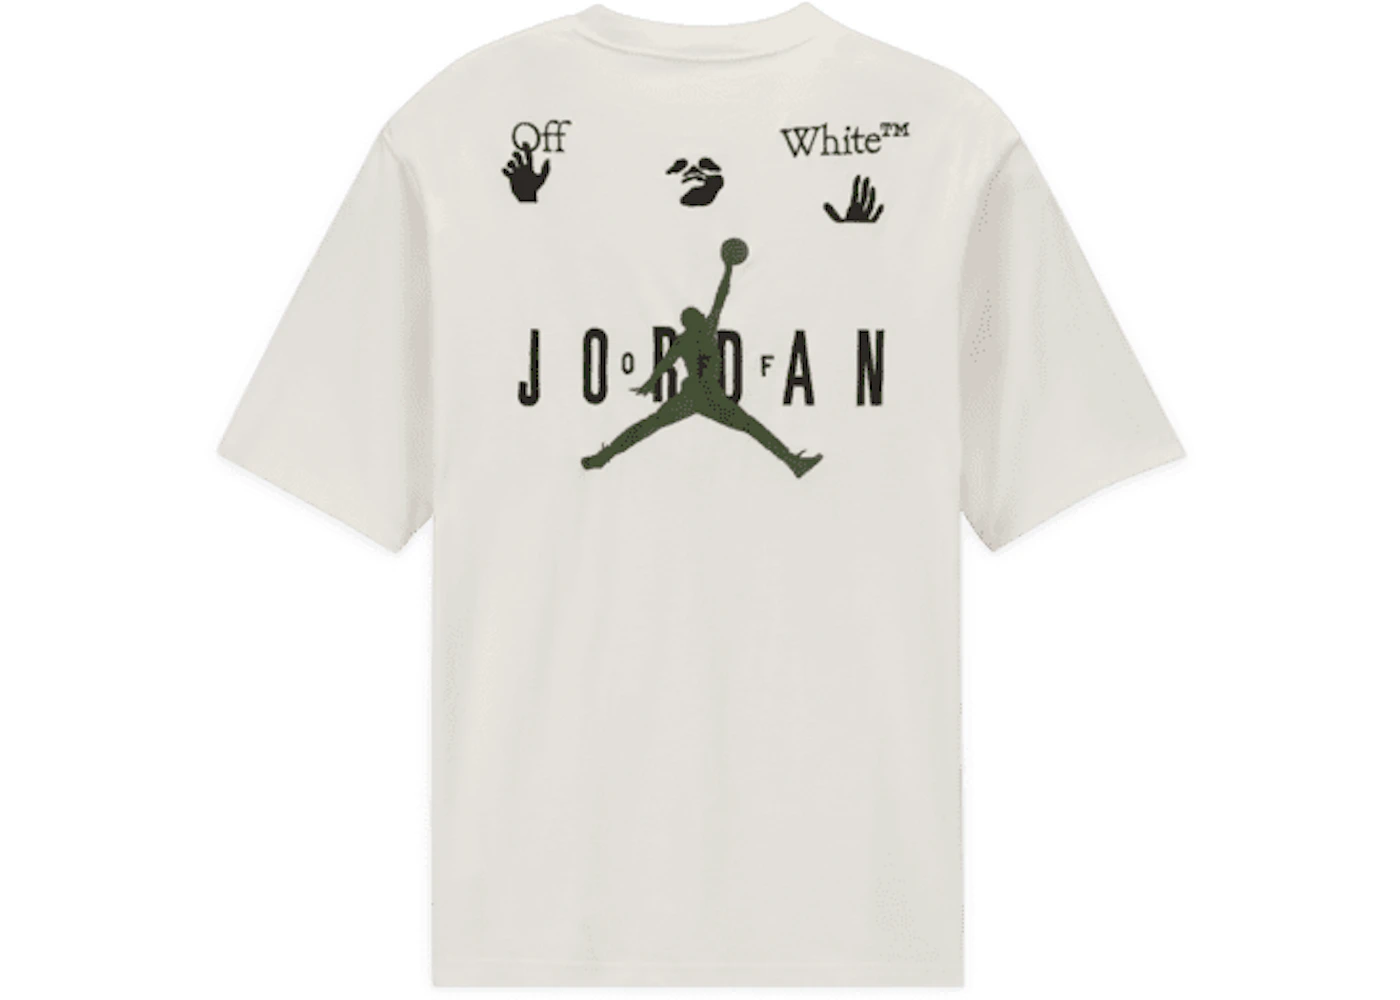 OFF-WHITE x Jordan T-shirt (Asia Sizing) White Men's - FW21 - US